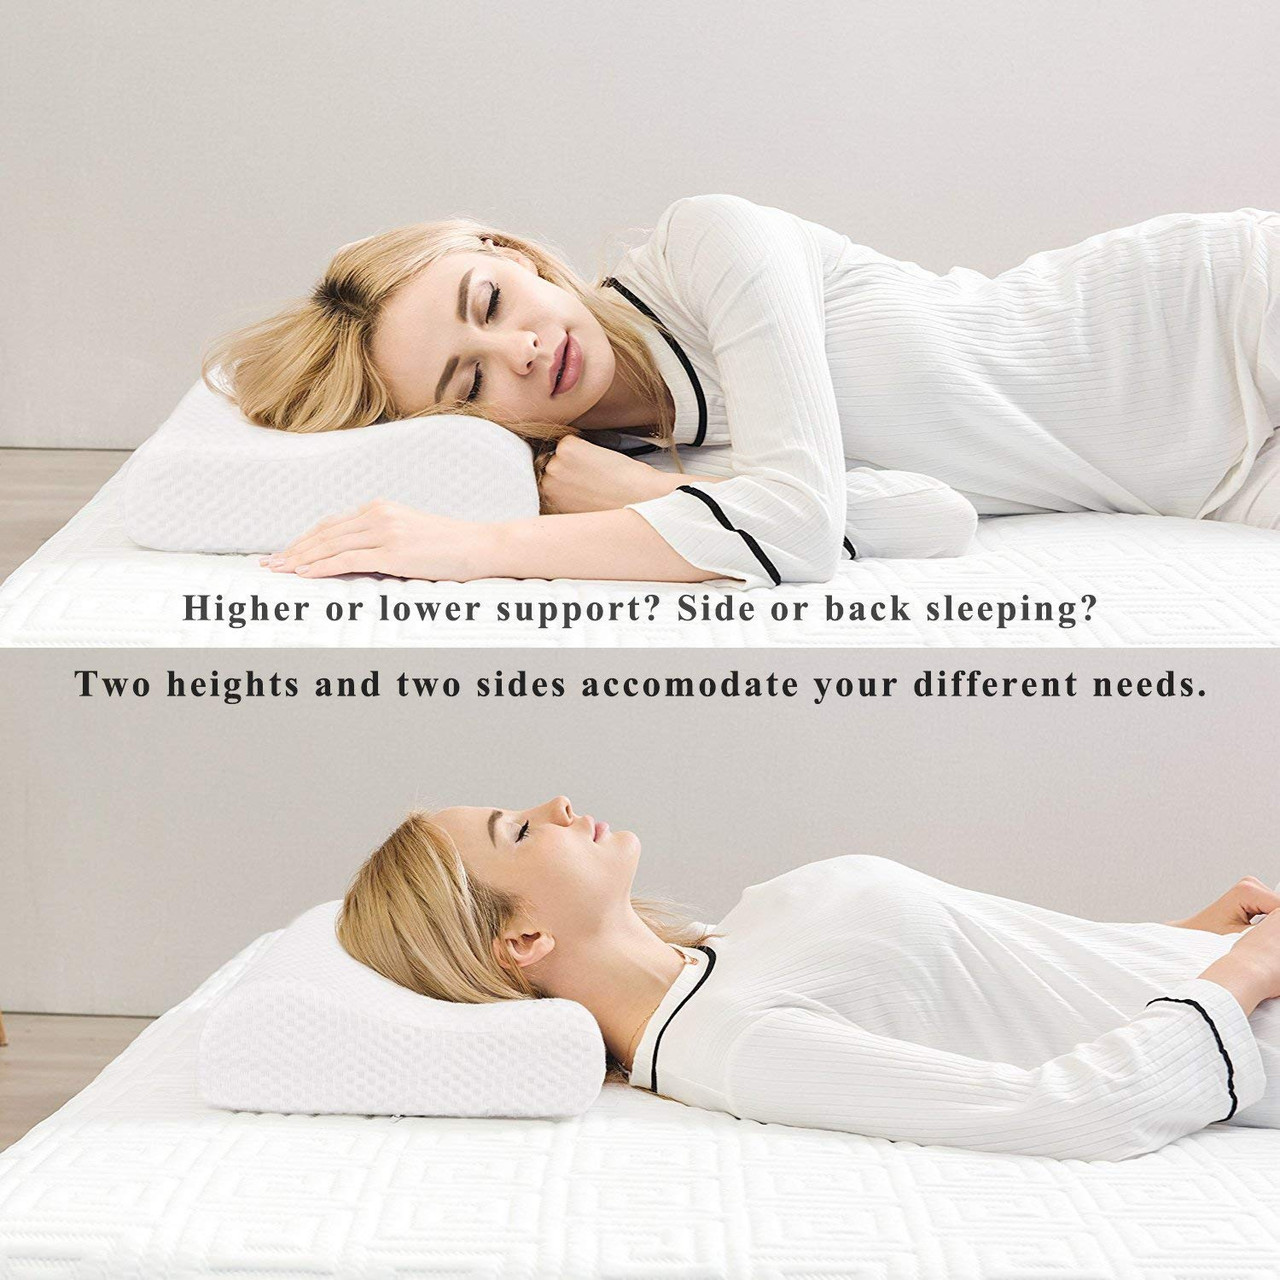 COMFILIFE Memory Foam Sleep Lumbar Support Pillow R-TRI-232 - The Home Depot